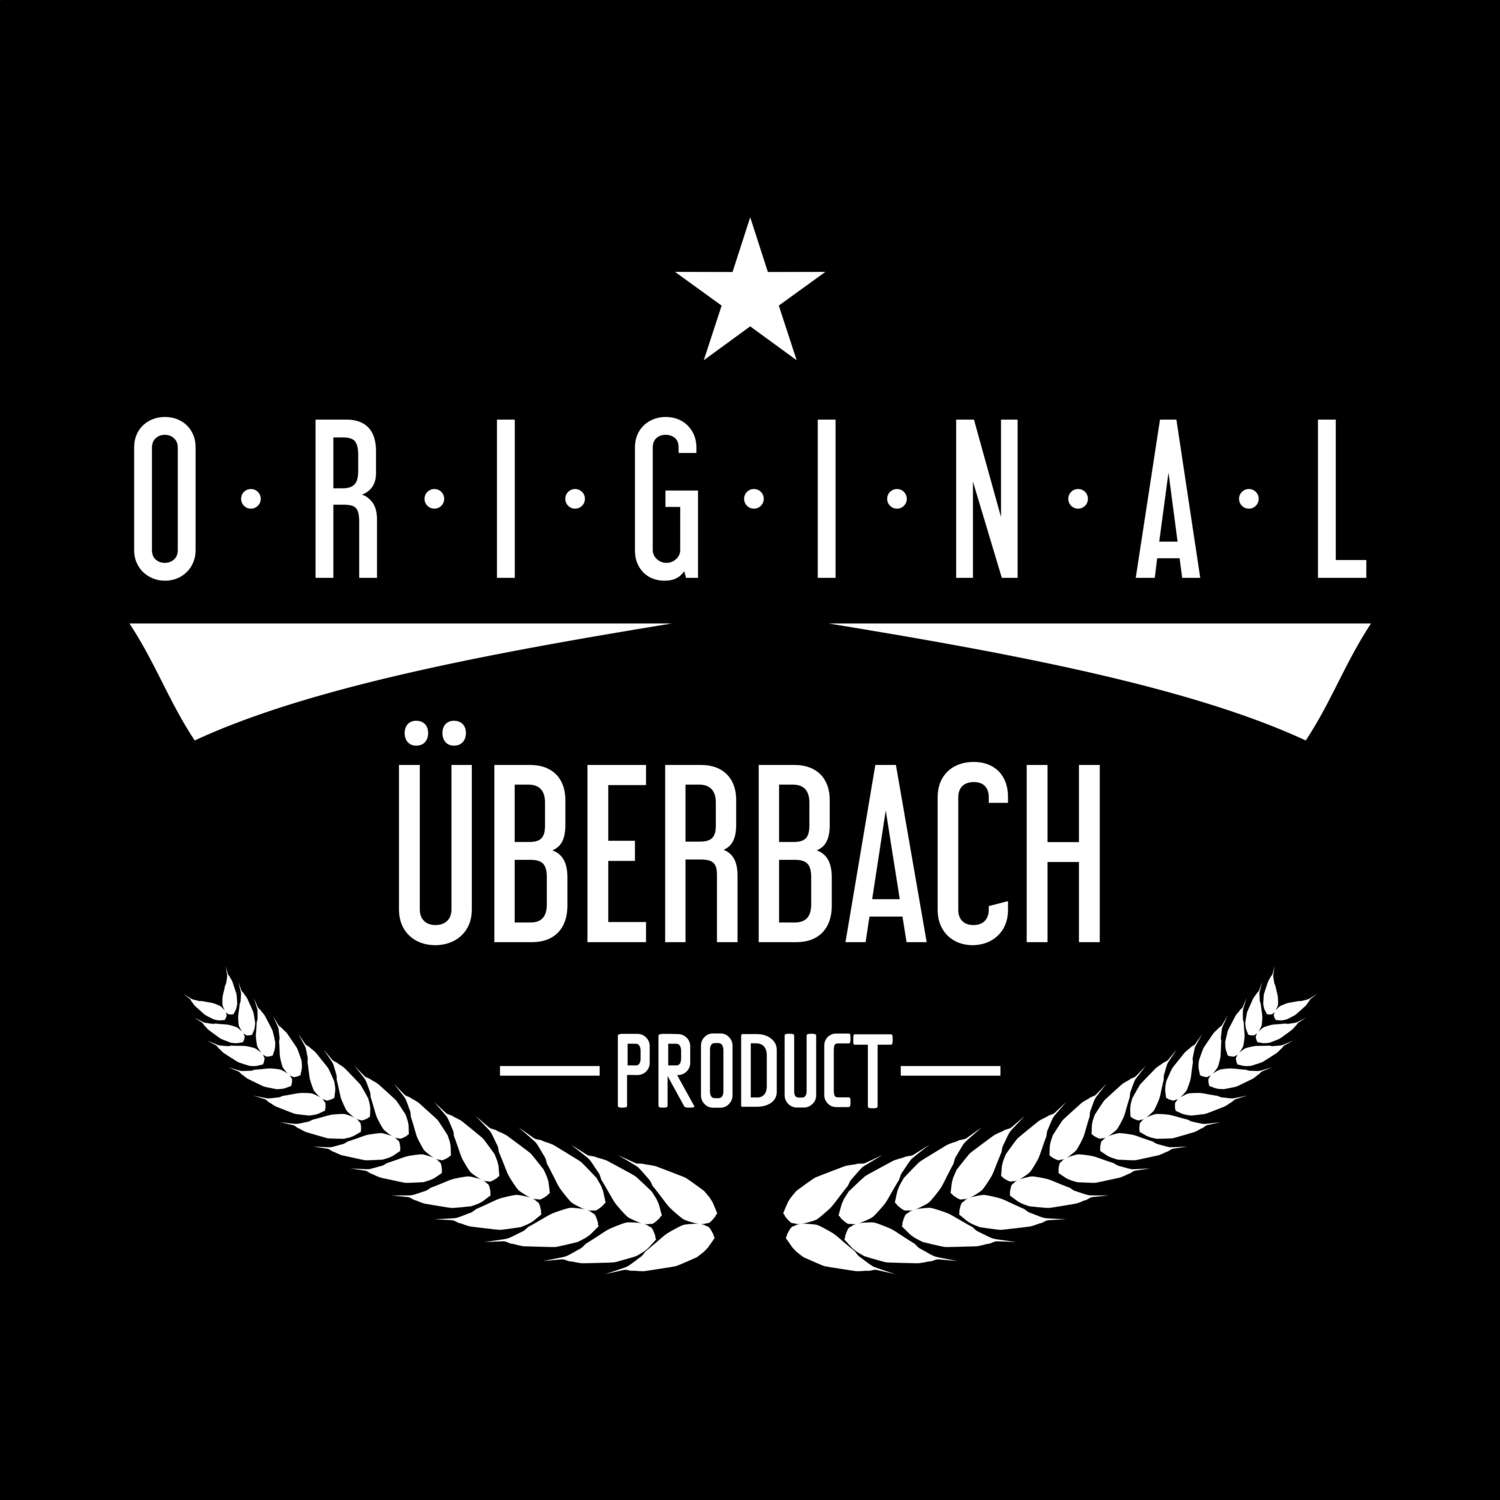 Überbach T-Shirt »Original Product«